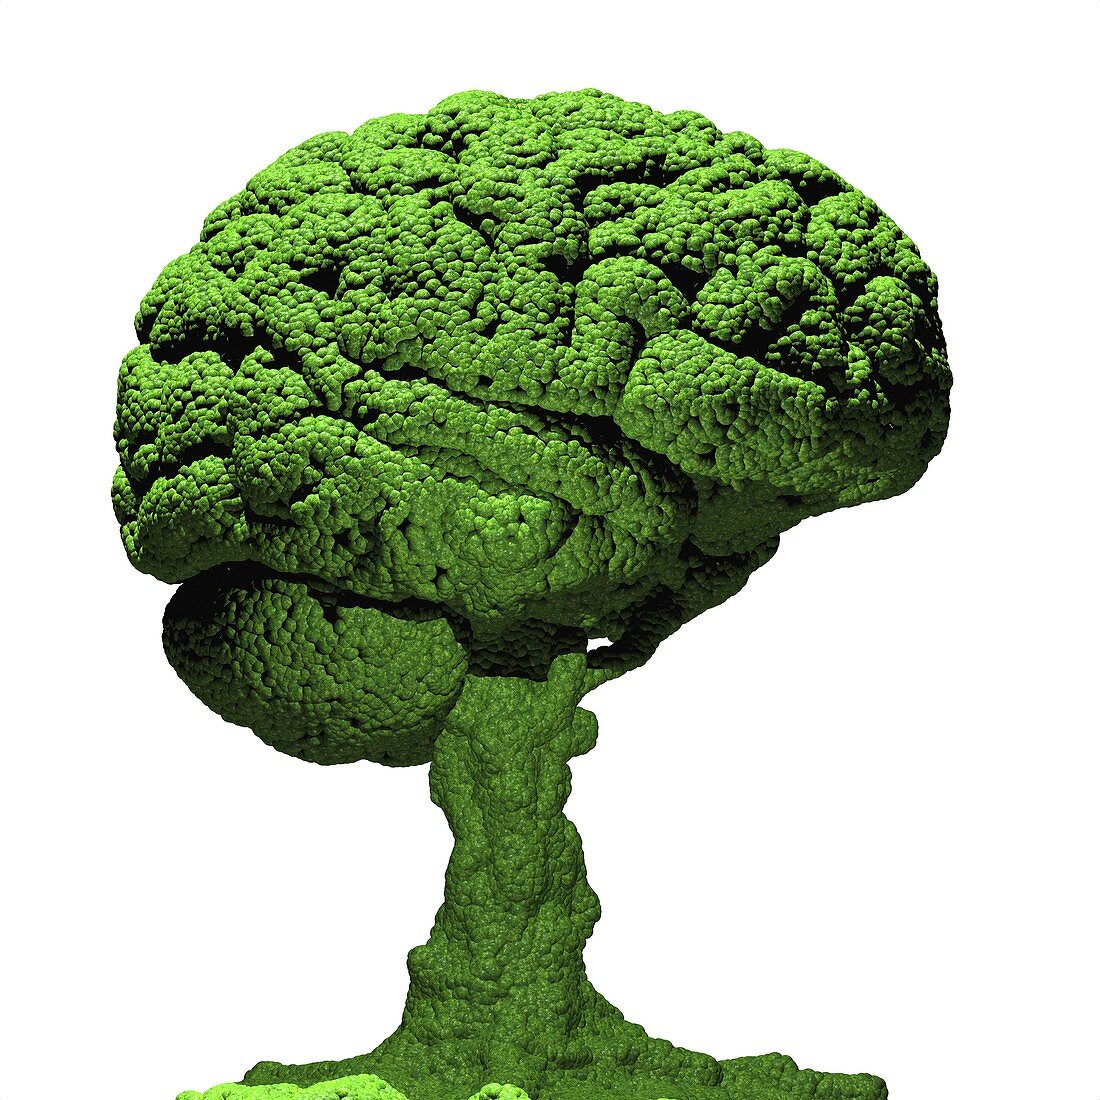 Brain as bonsai tree,conceptual image